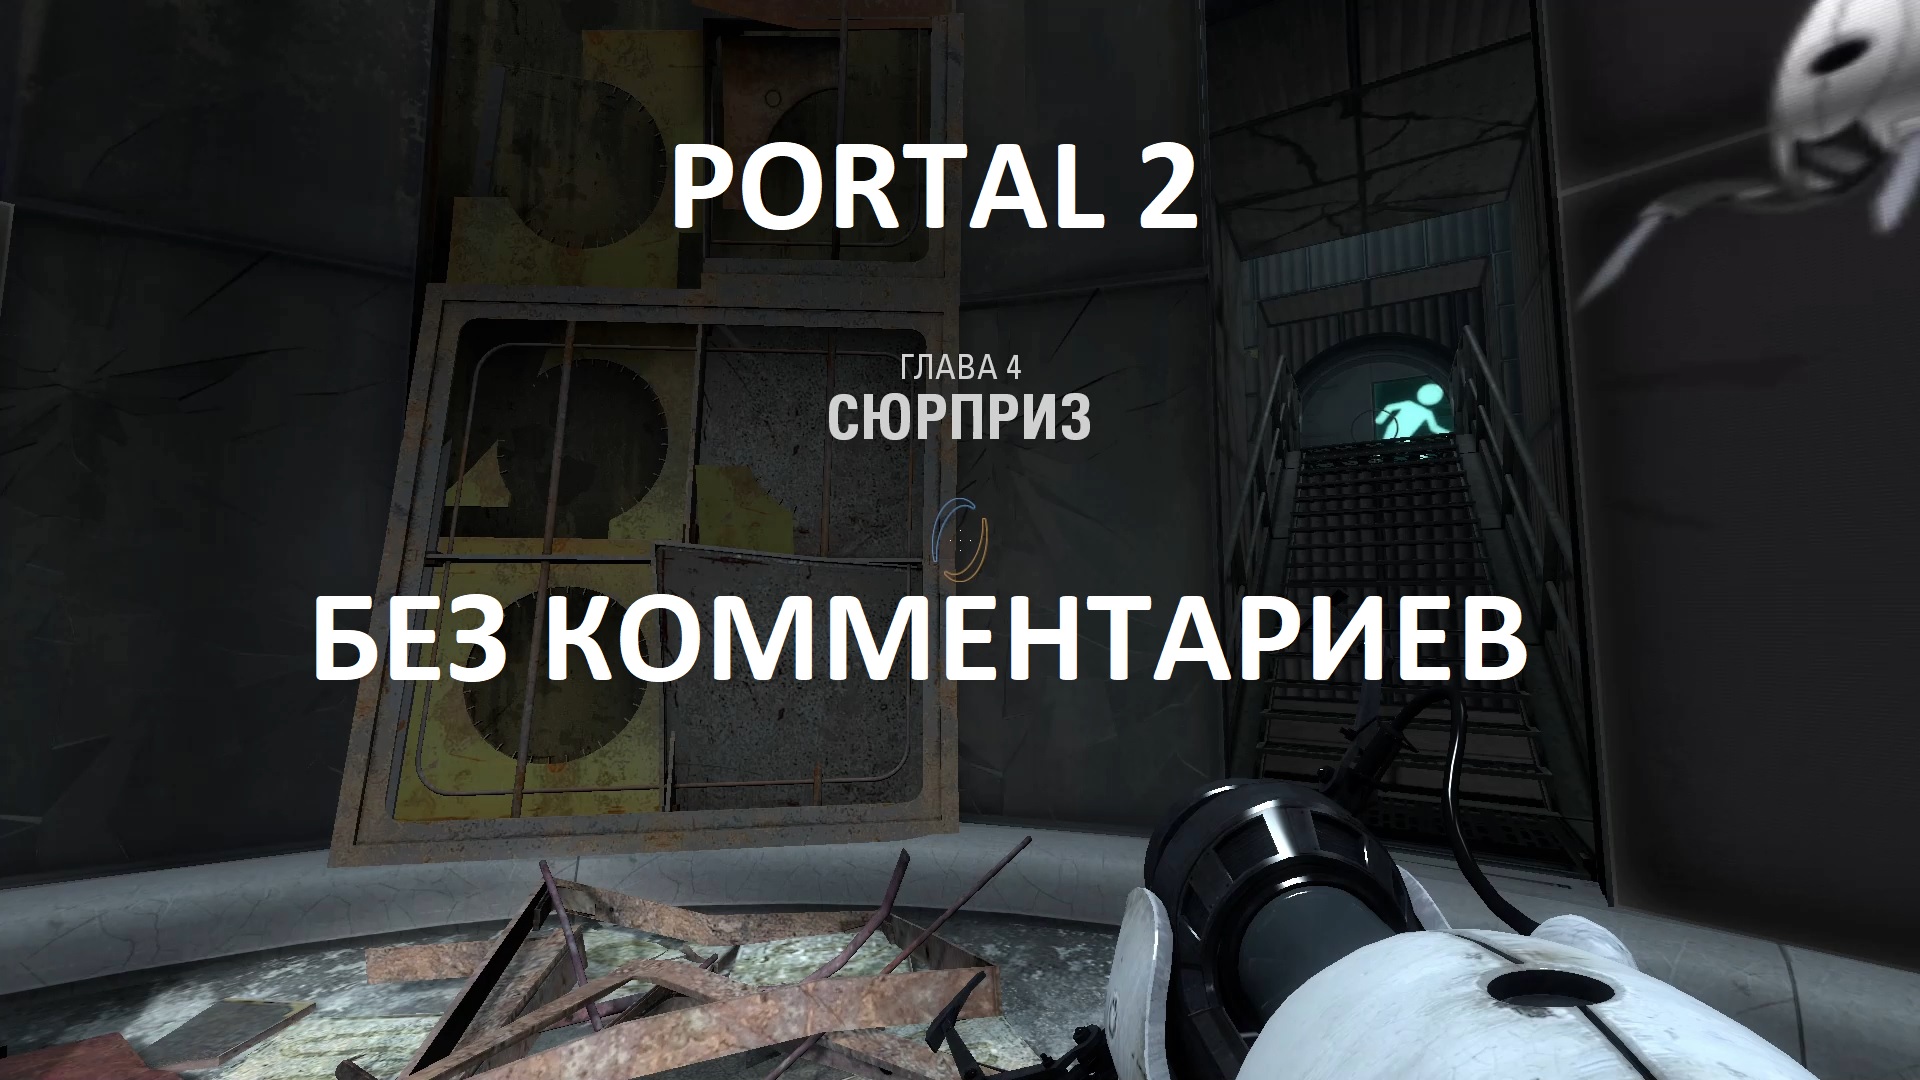 Portal 2 кооператив одному фото 51